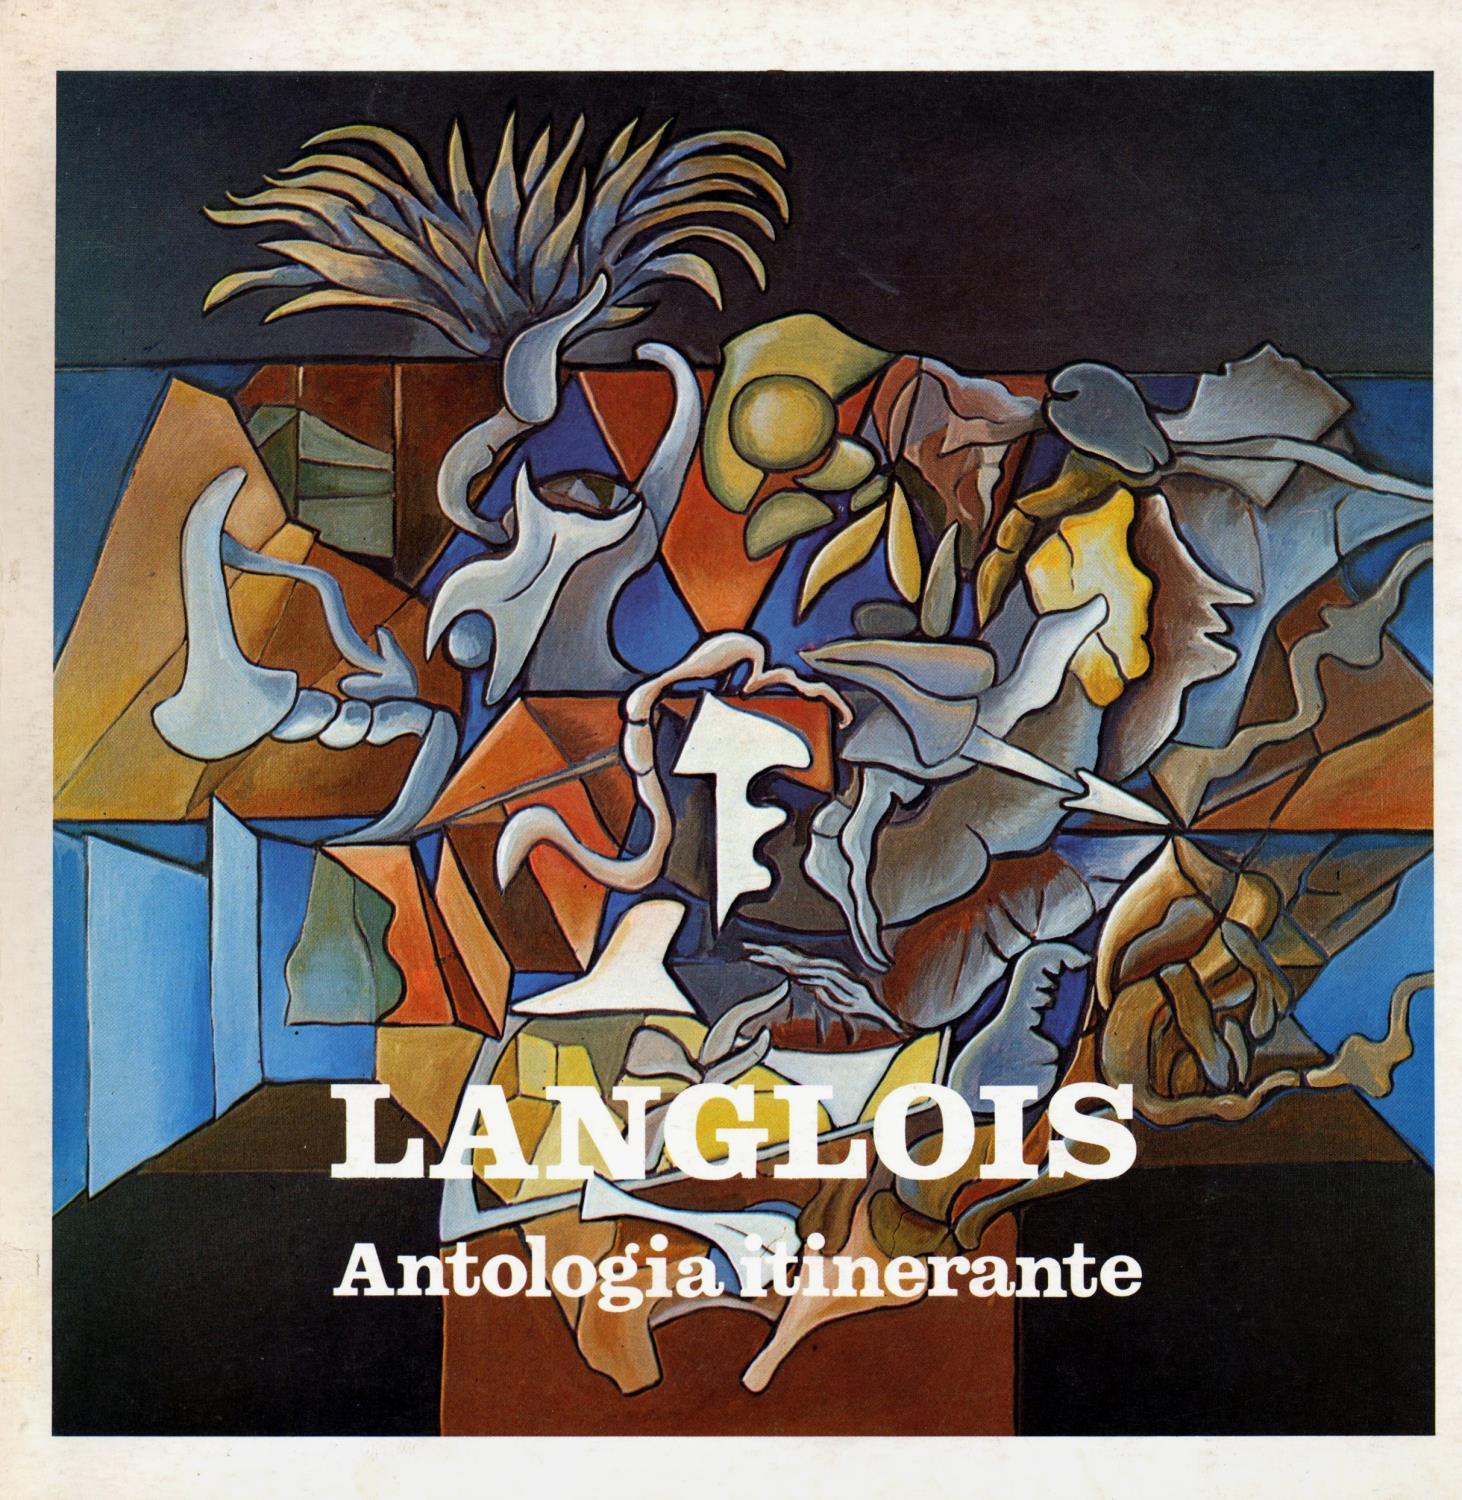 Juan Carlos Langlois. Antologia Itinerante